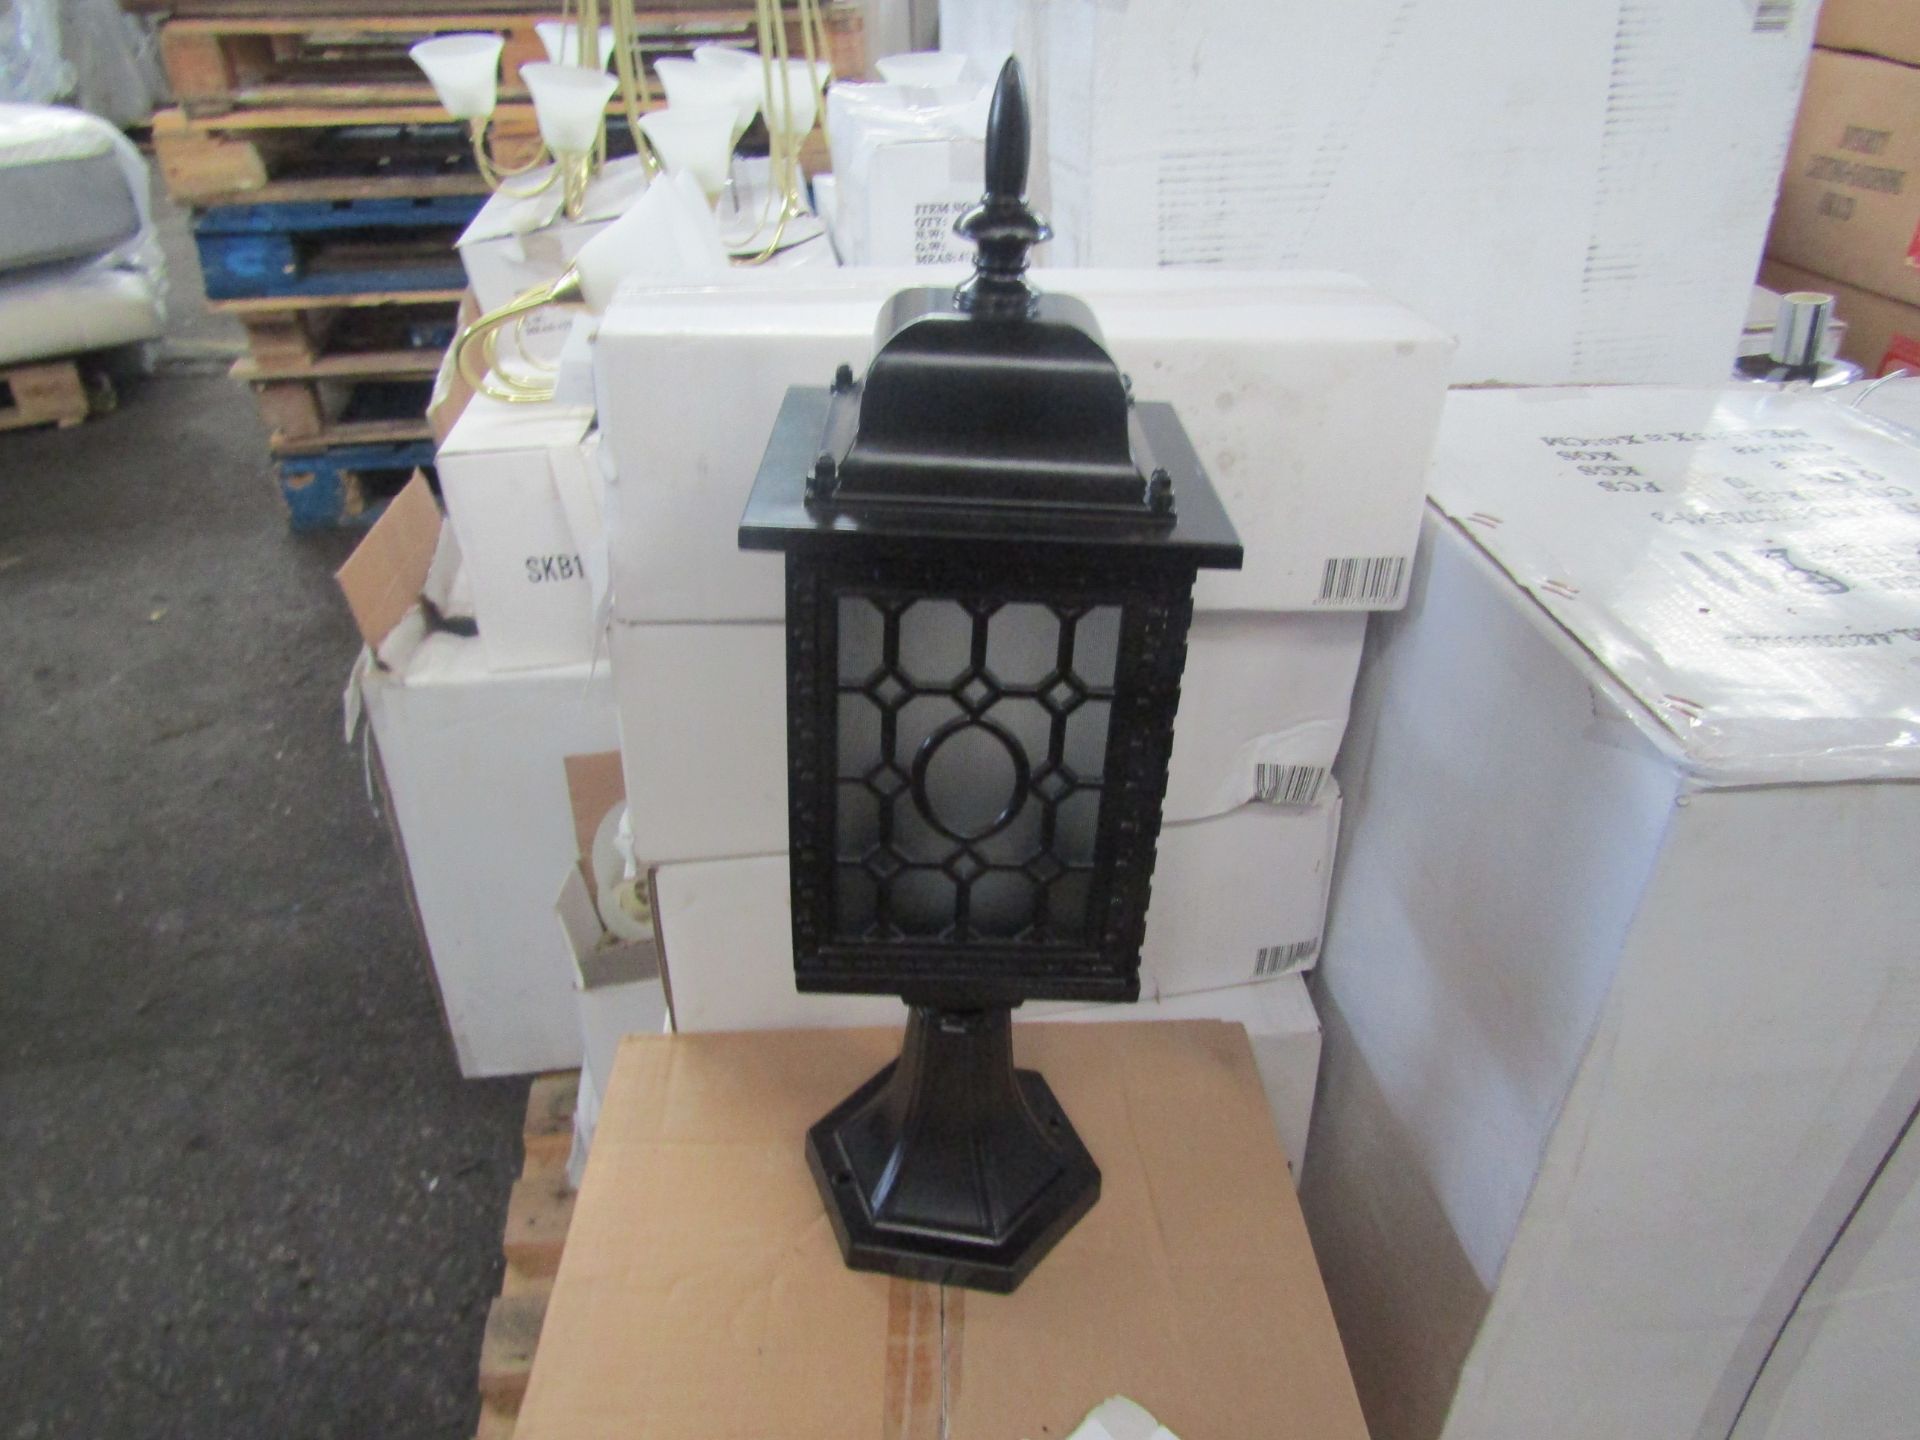 Black Outdoor Post Light. H40cm x W18cm. New Boxed (IL014)